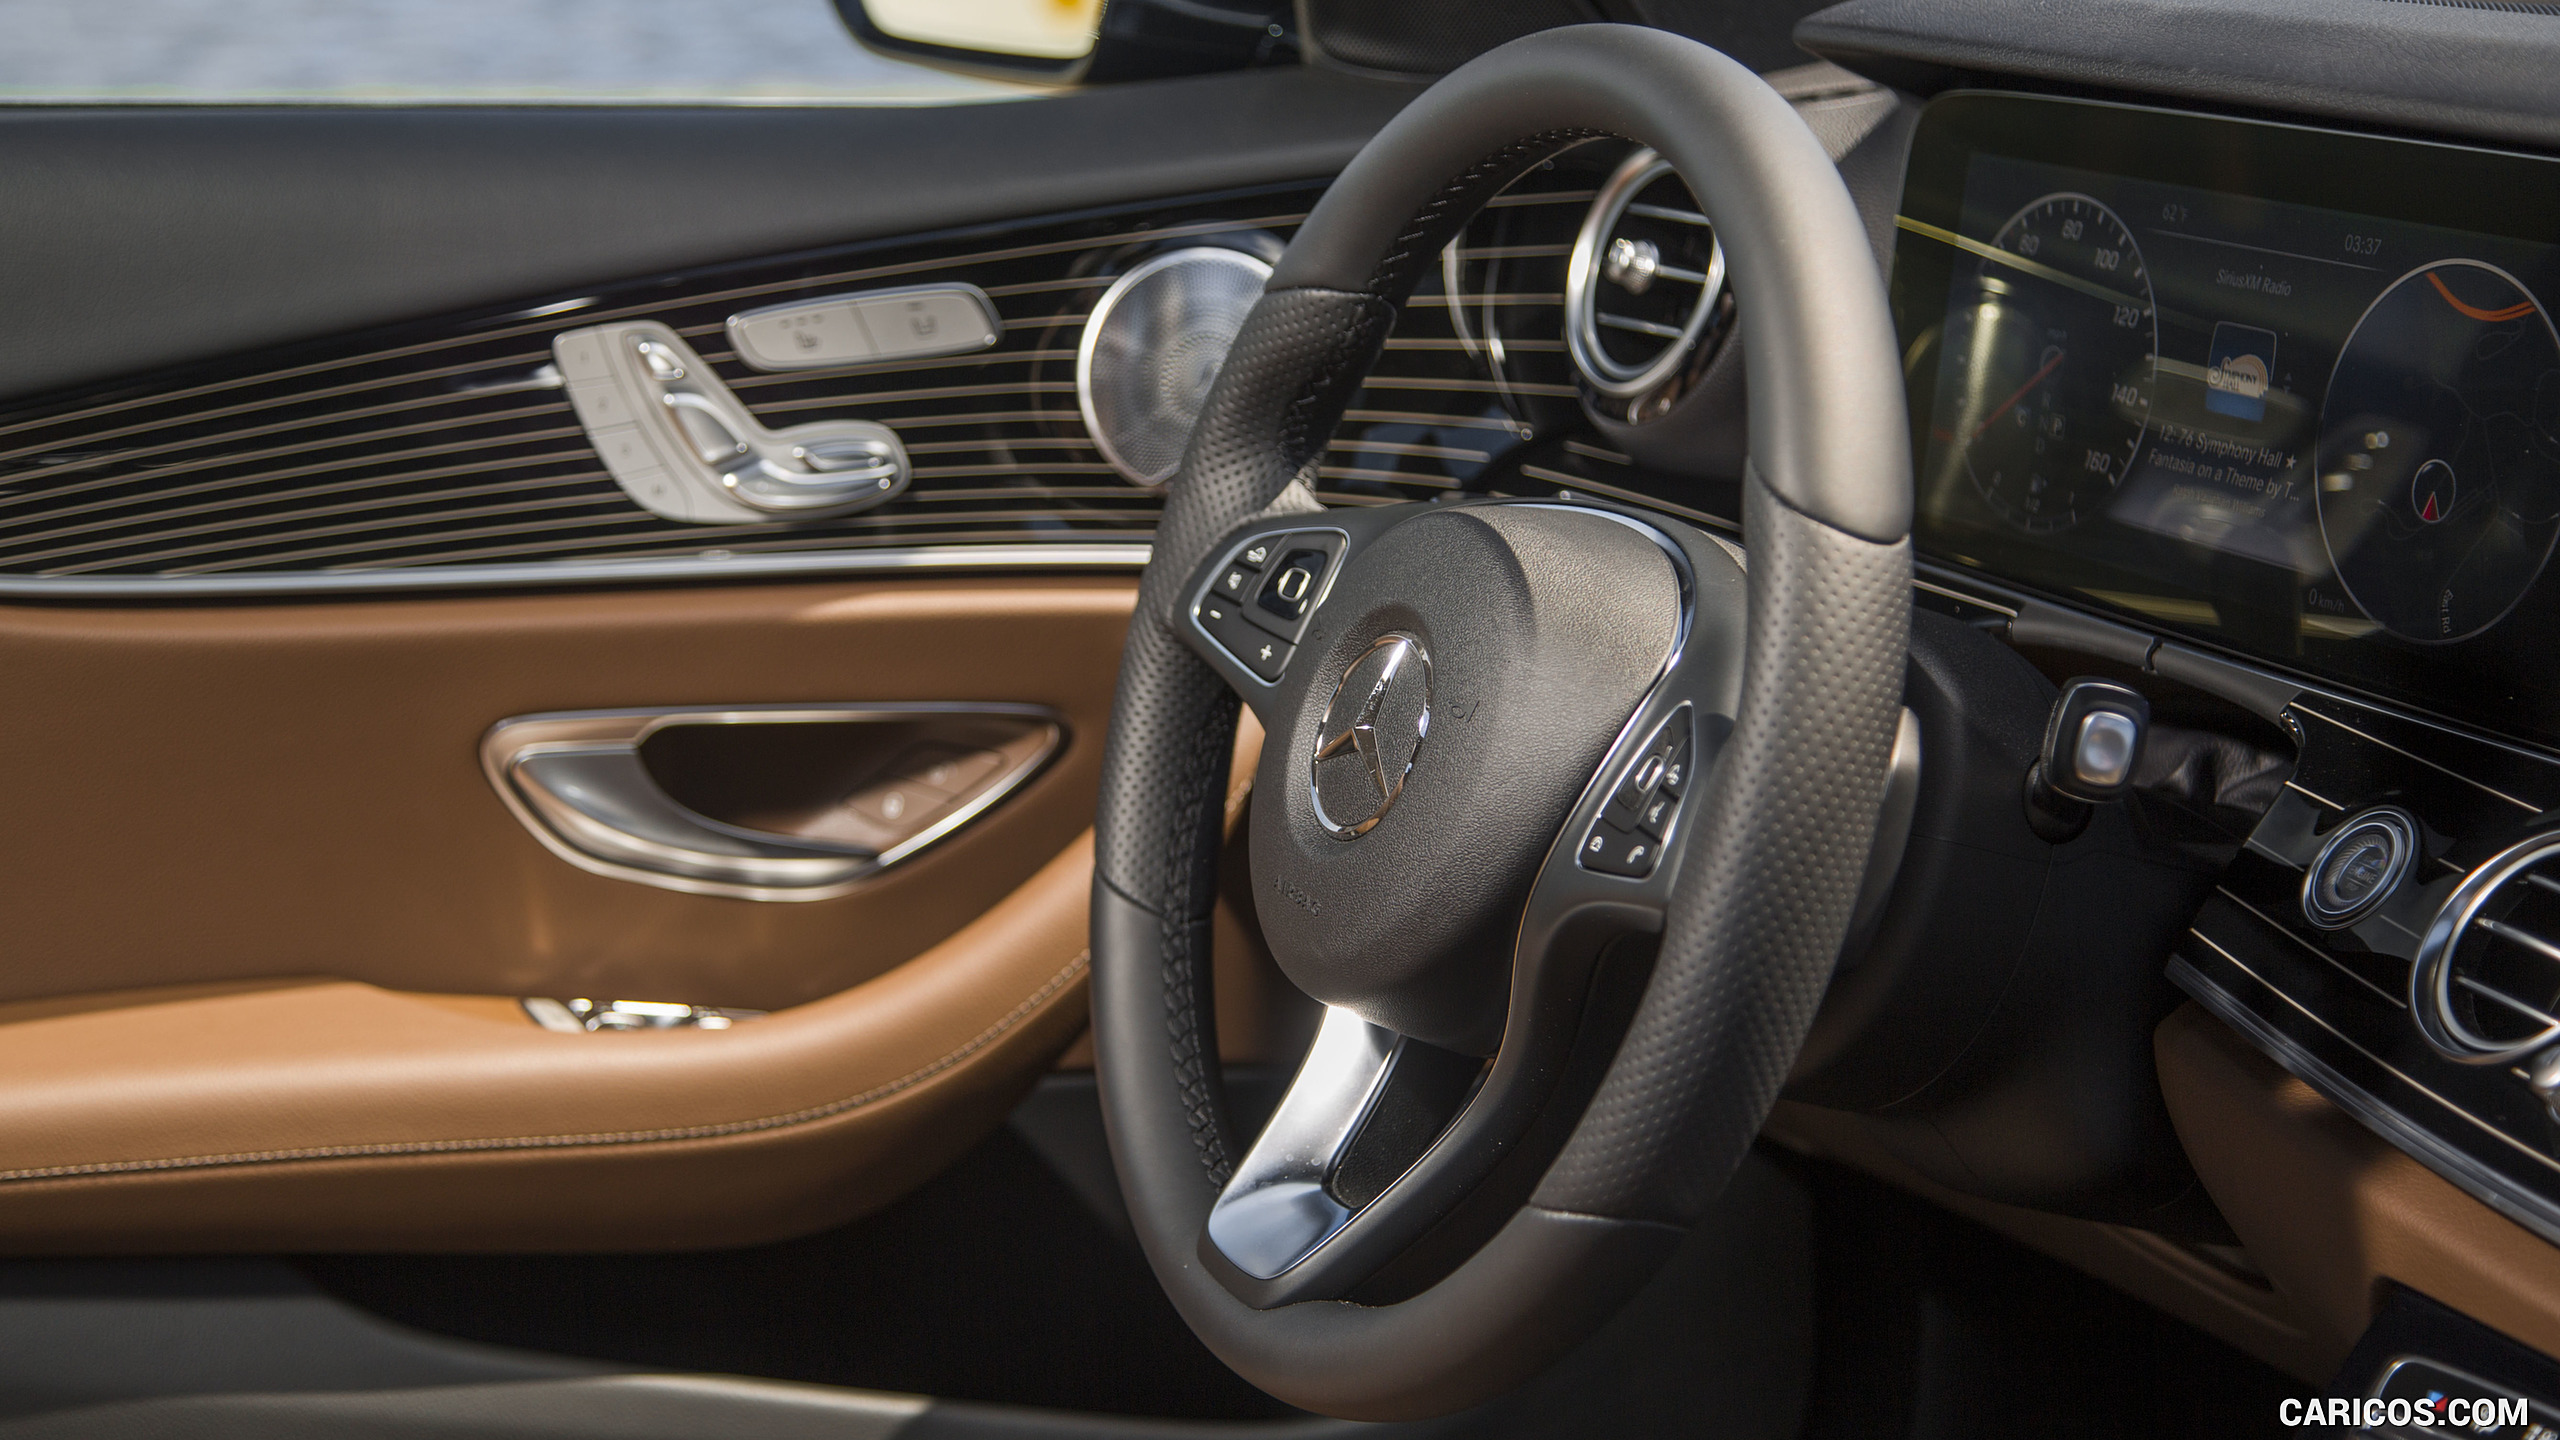 2017 Mercedes-Benz E-Class E300 Sedan (US-Spec) - Interior, Steering Wheel, #67 of 117